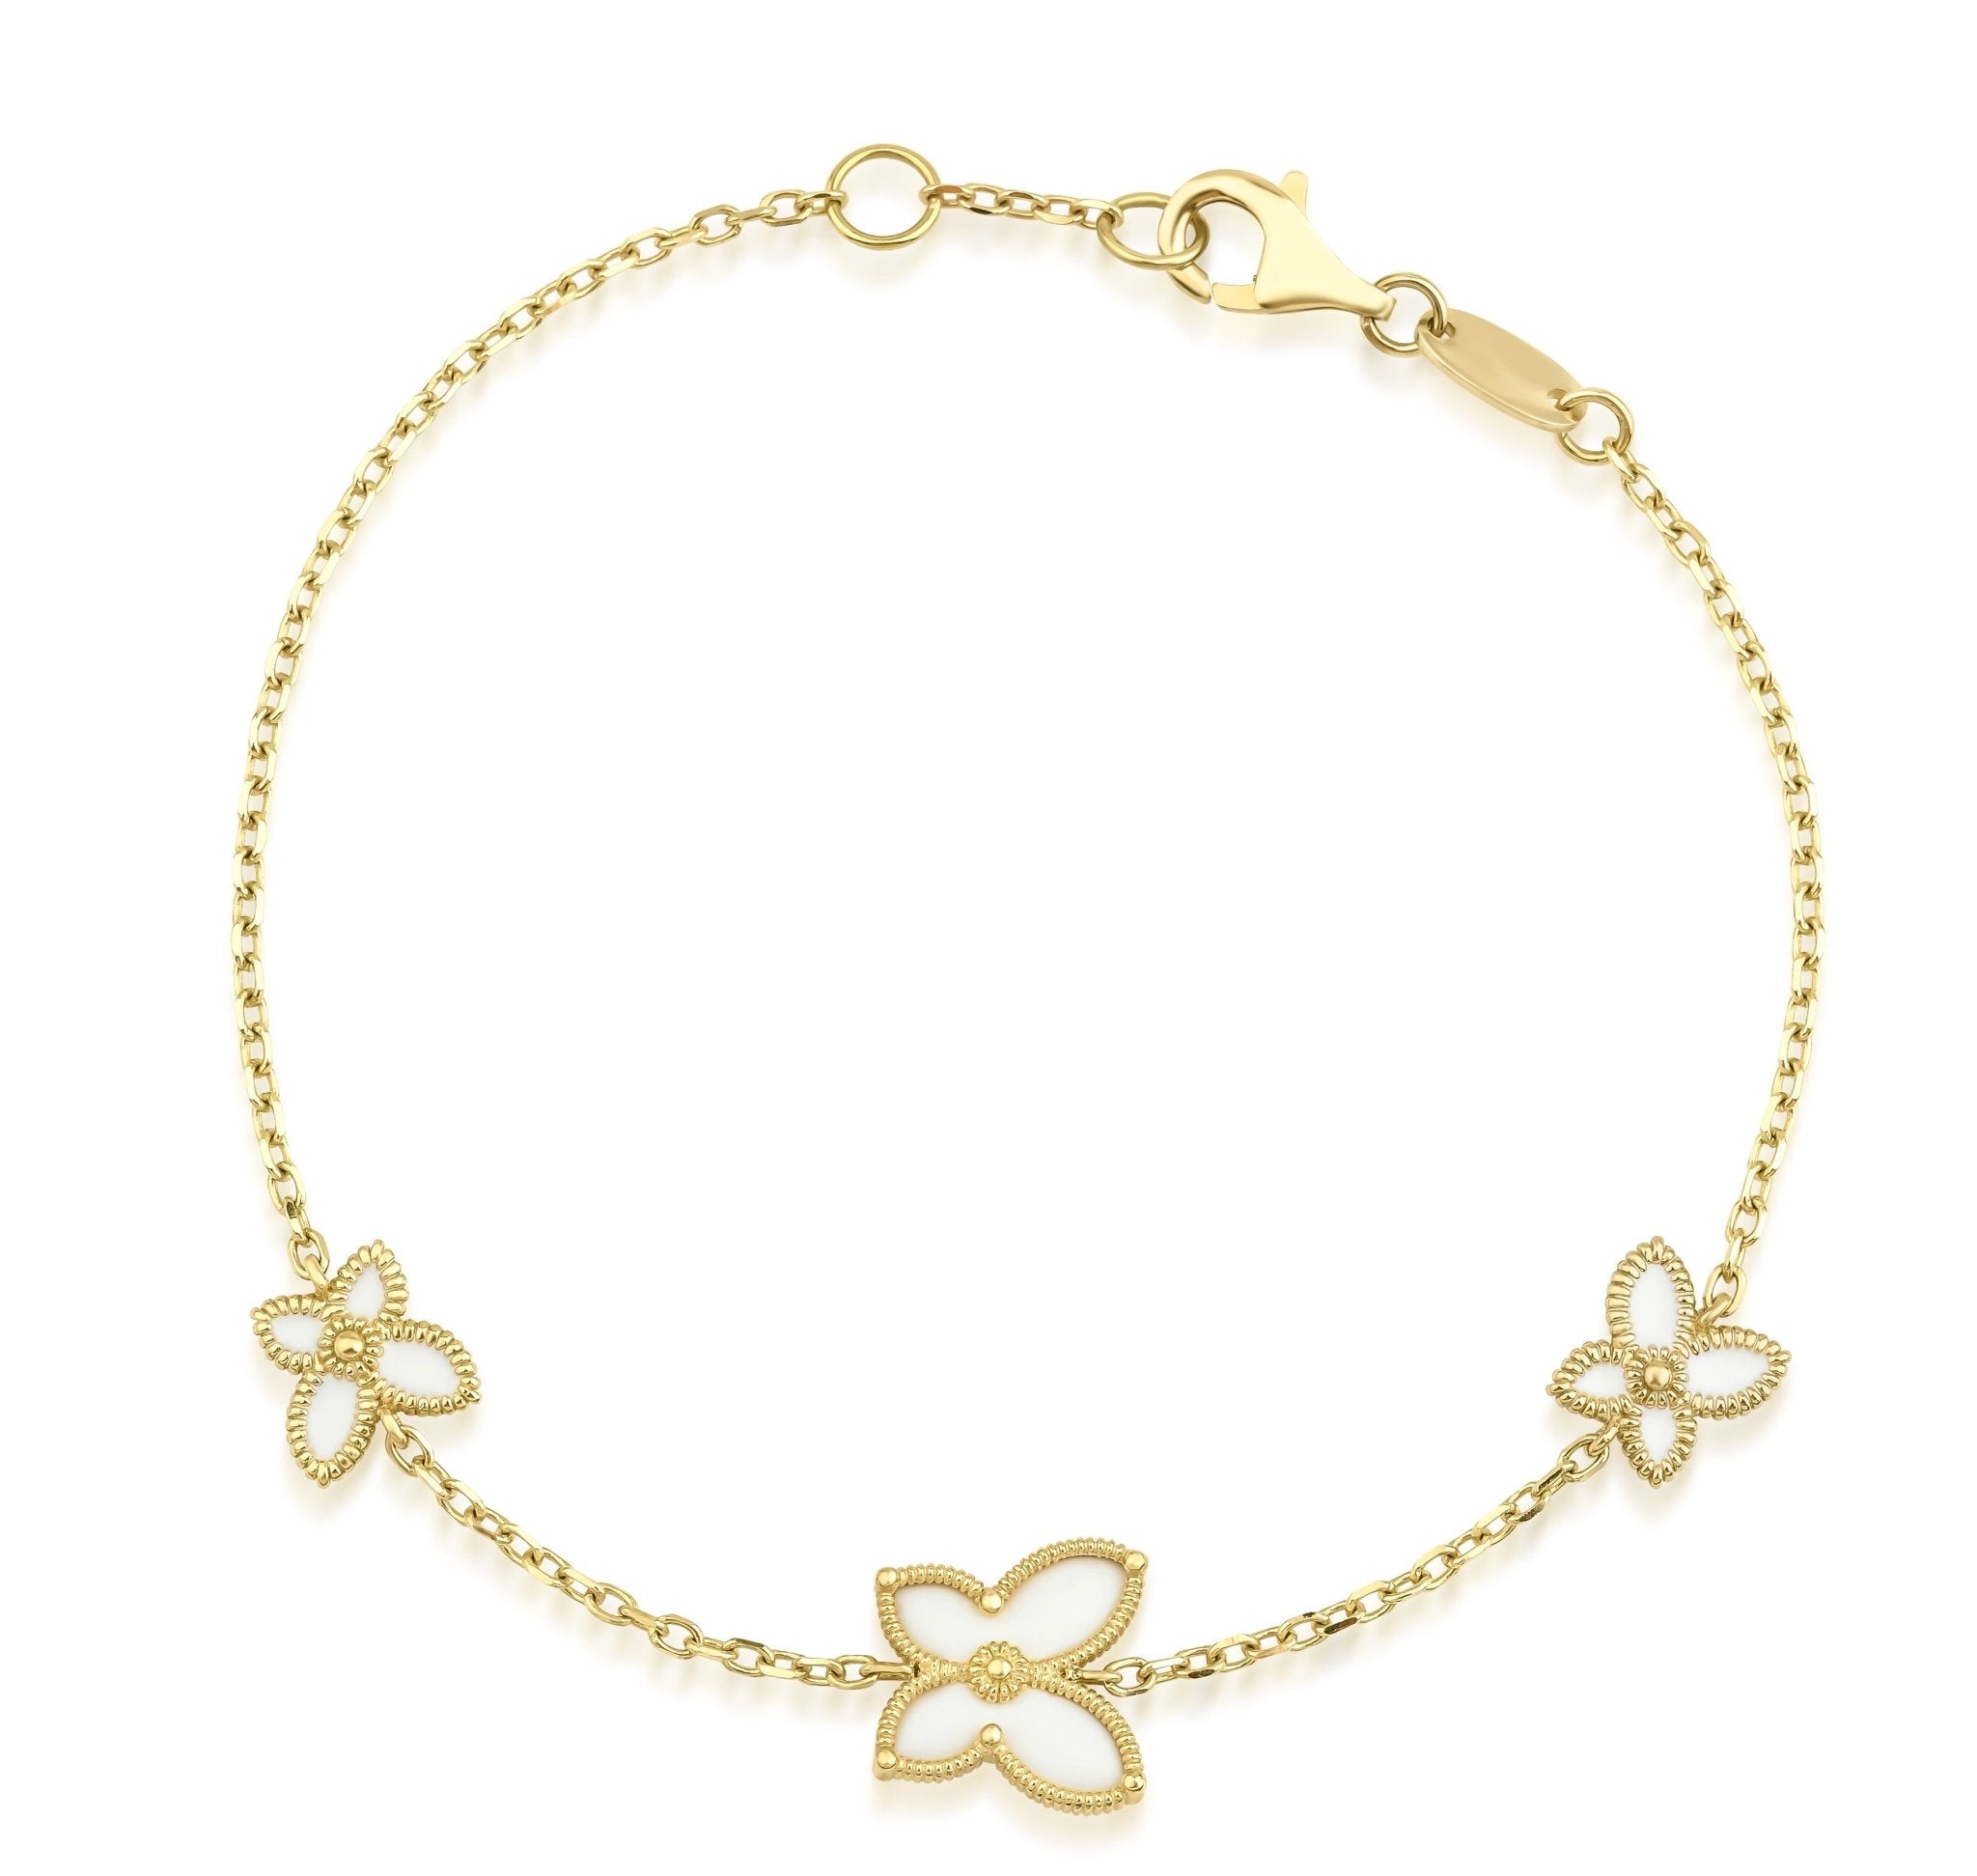 10kt Gold Mother of Pearl Butterfly Bracelet